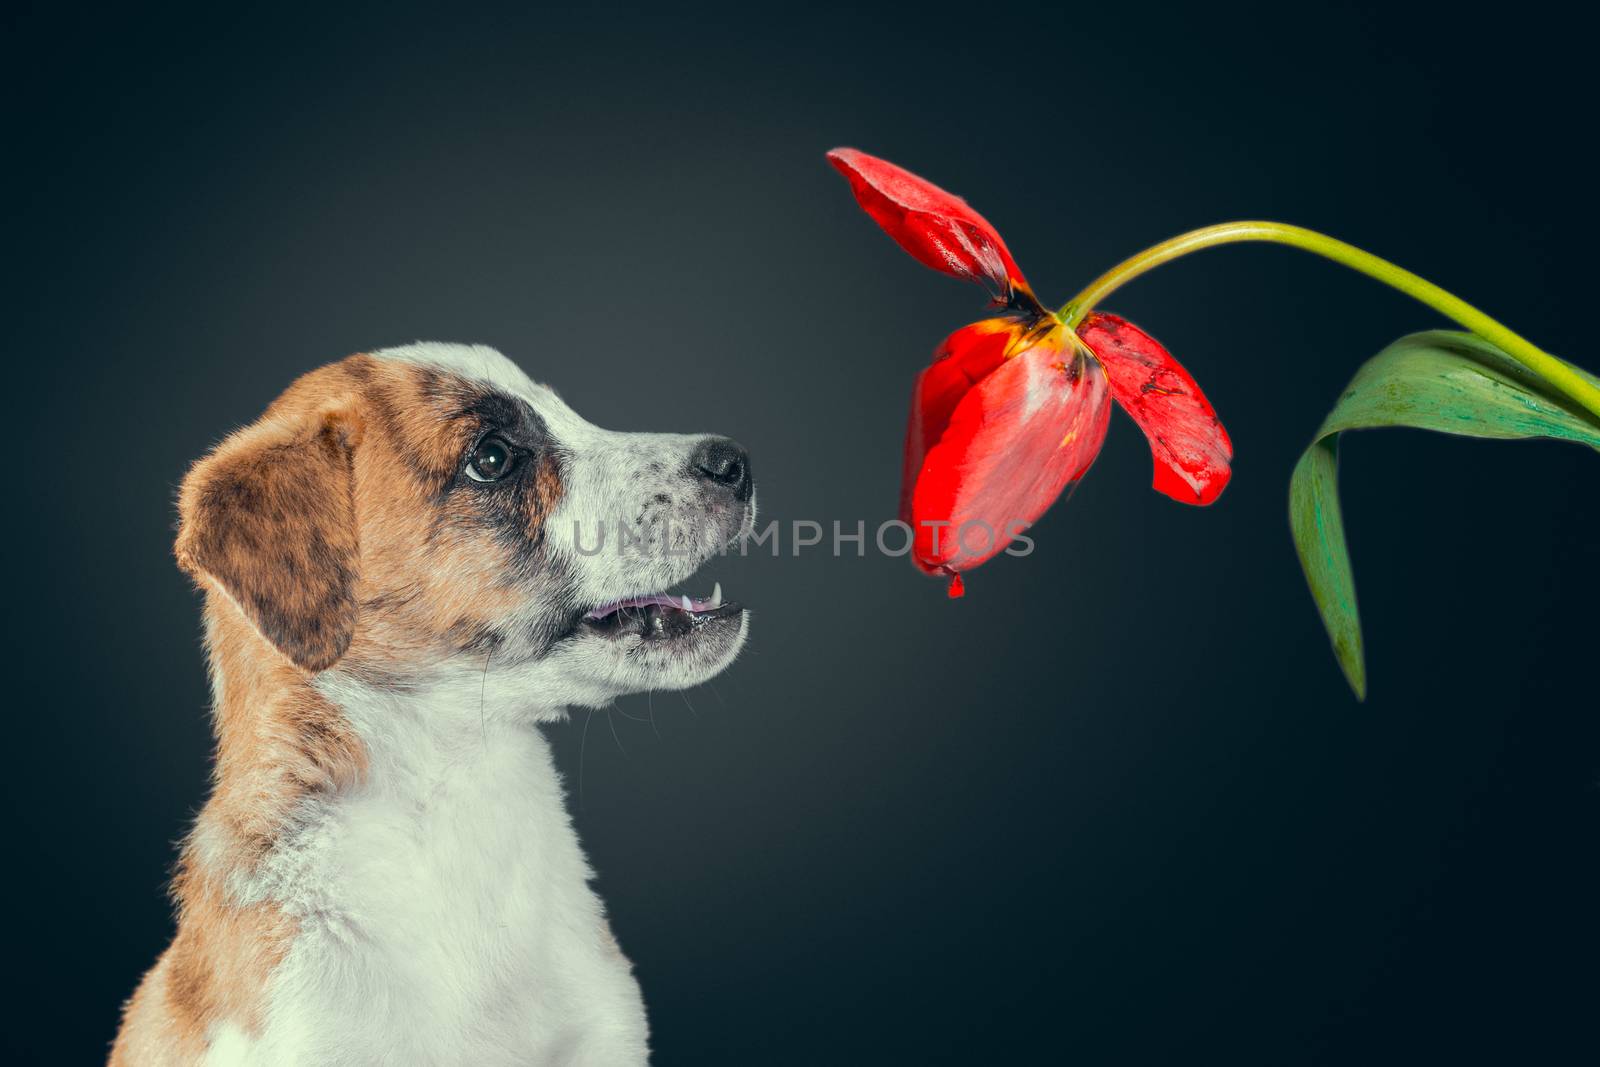 piebald puppy with a tulip flower at dark background by Gera8th